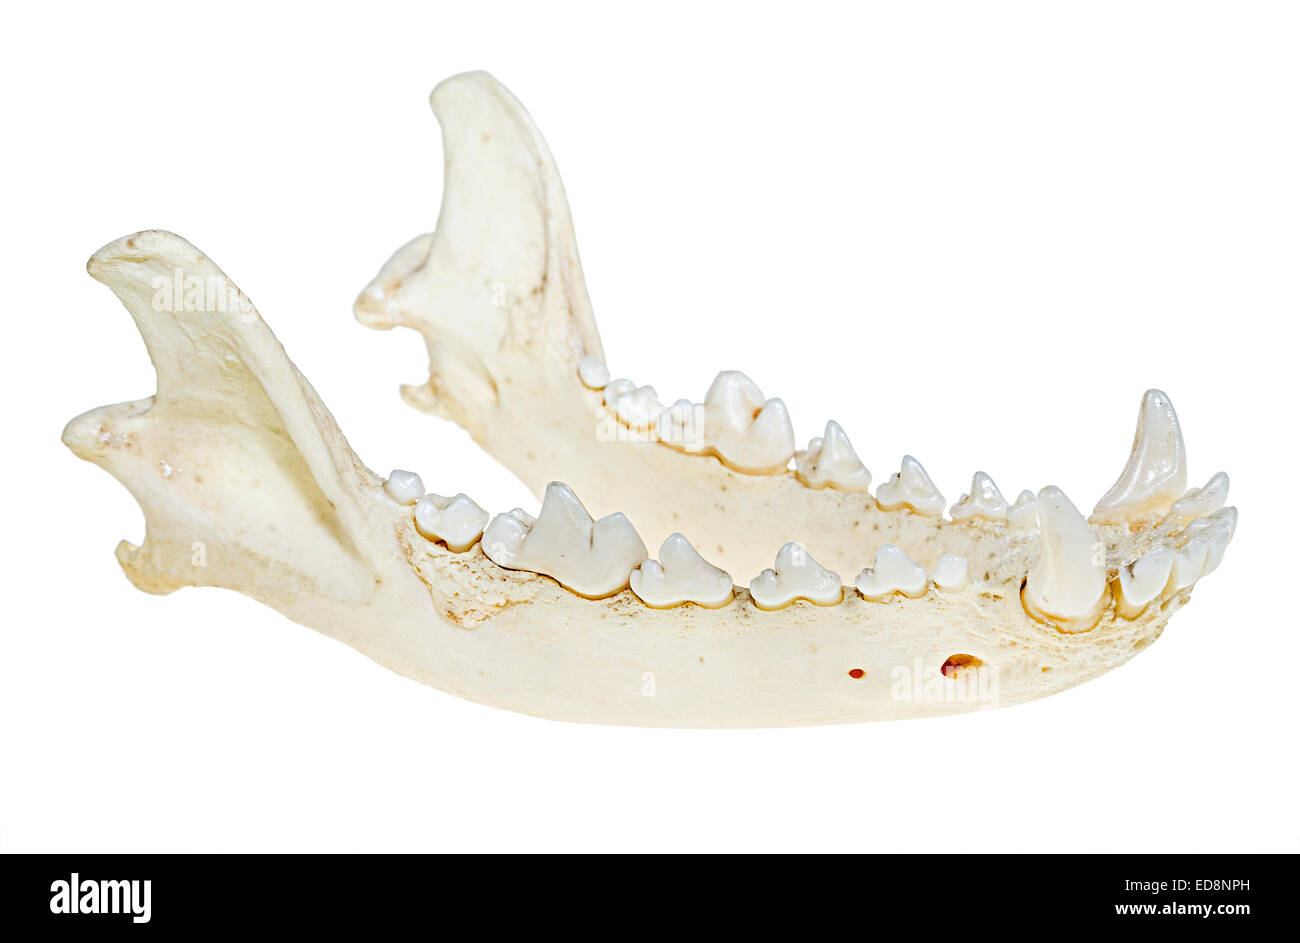 Dog skull mandible, lower jaw showing teeth Stock Photo